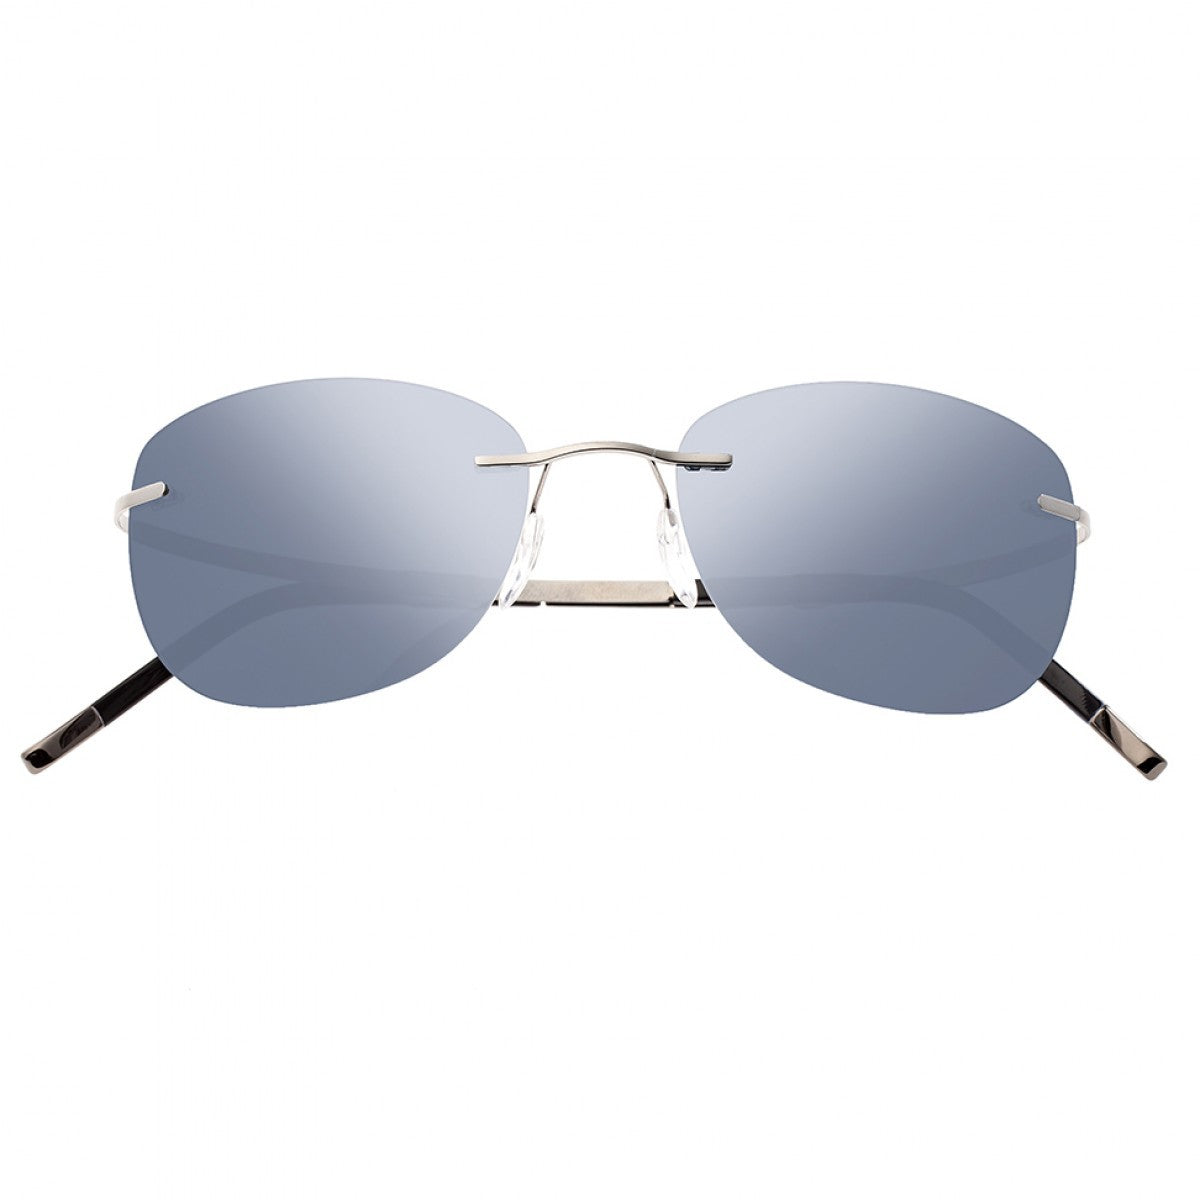 Breed Adhara Polarized Sunglasses - Gunmetal/Black - BSG043GM